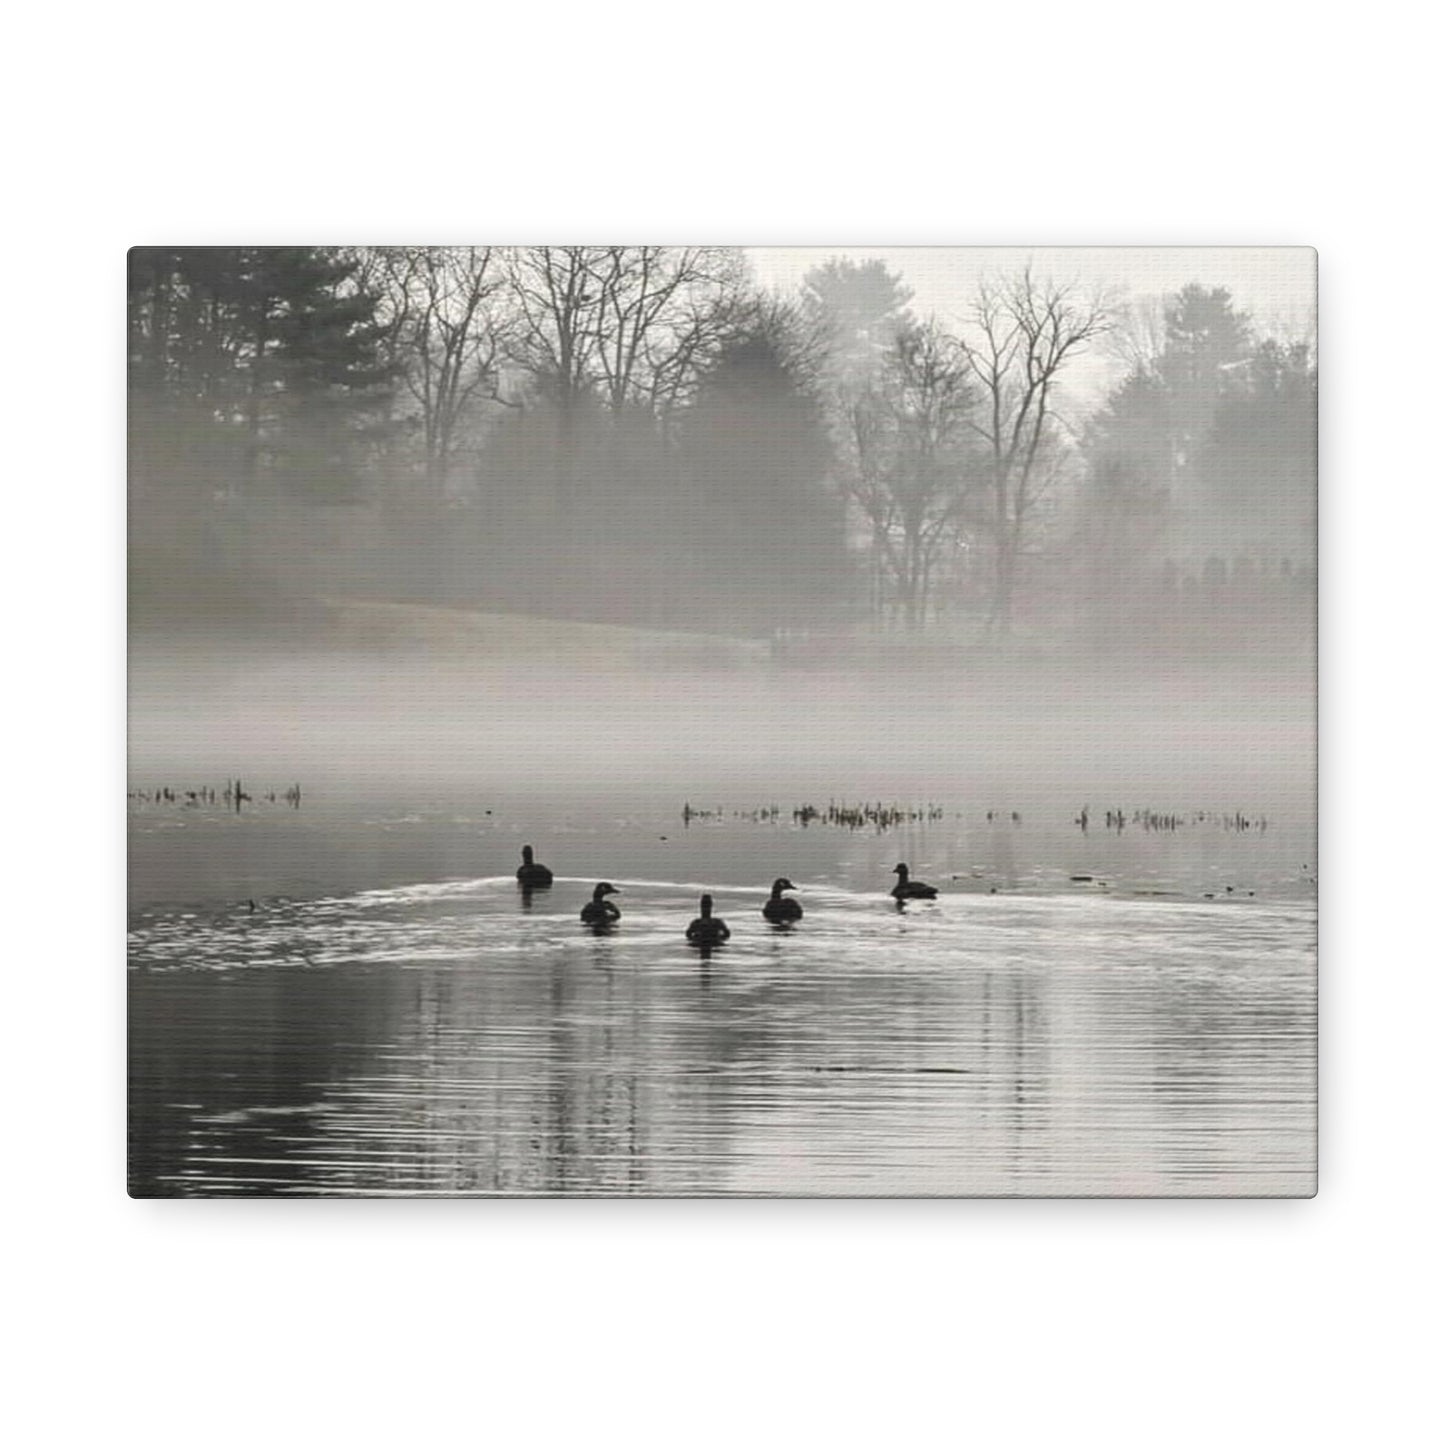 Lake Wintergreen Ducks Canvas Art Print